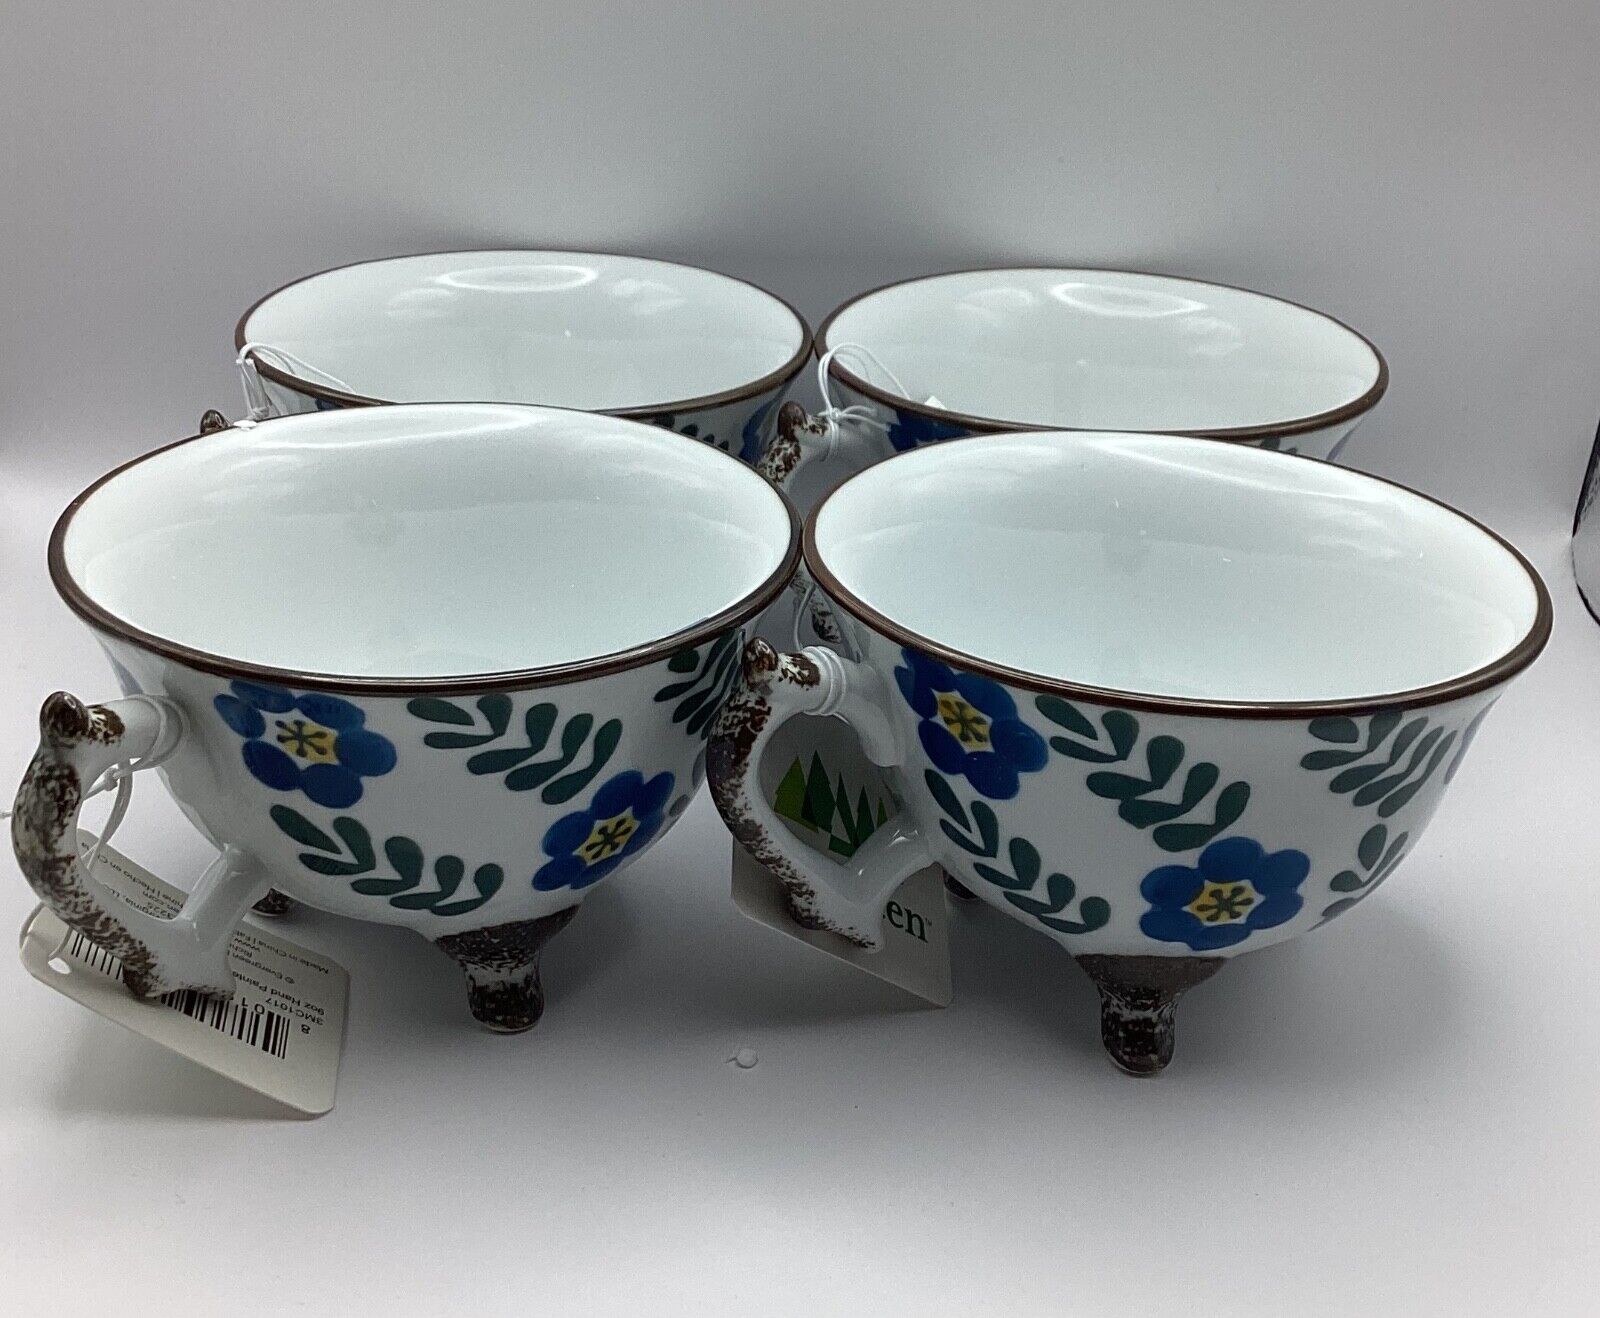 Evergreen Hand Painted Porcelain Teacup, Blue Flowers 9oz